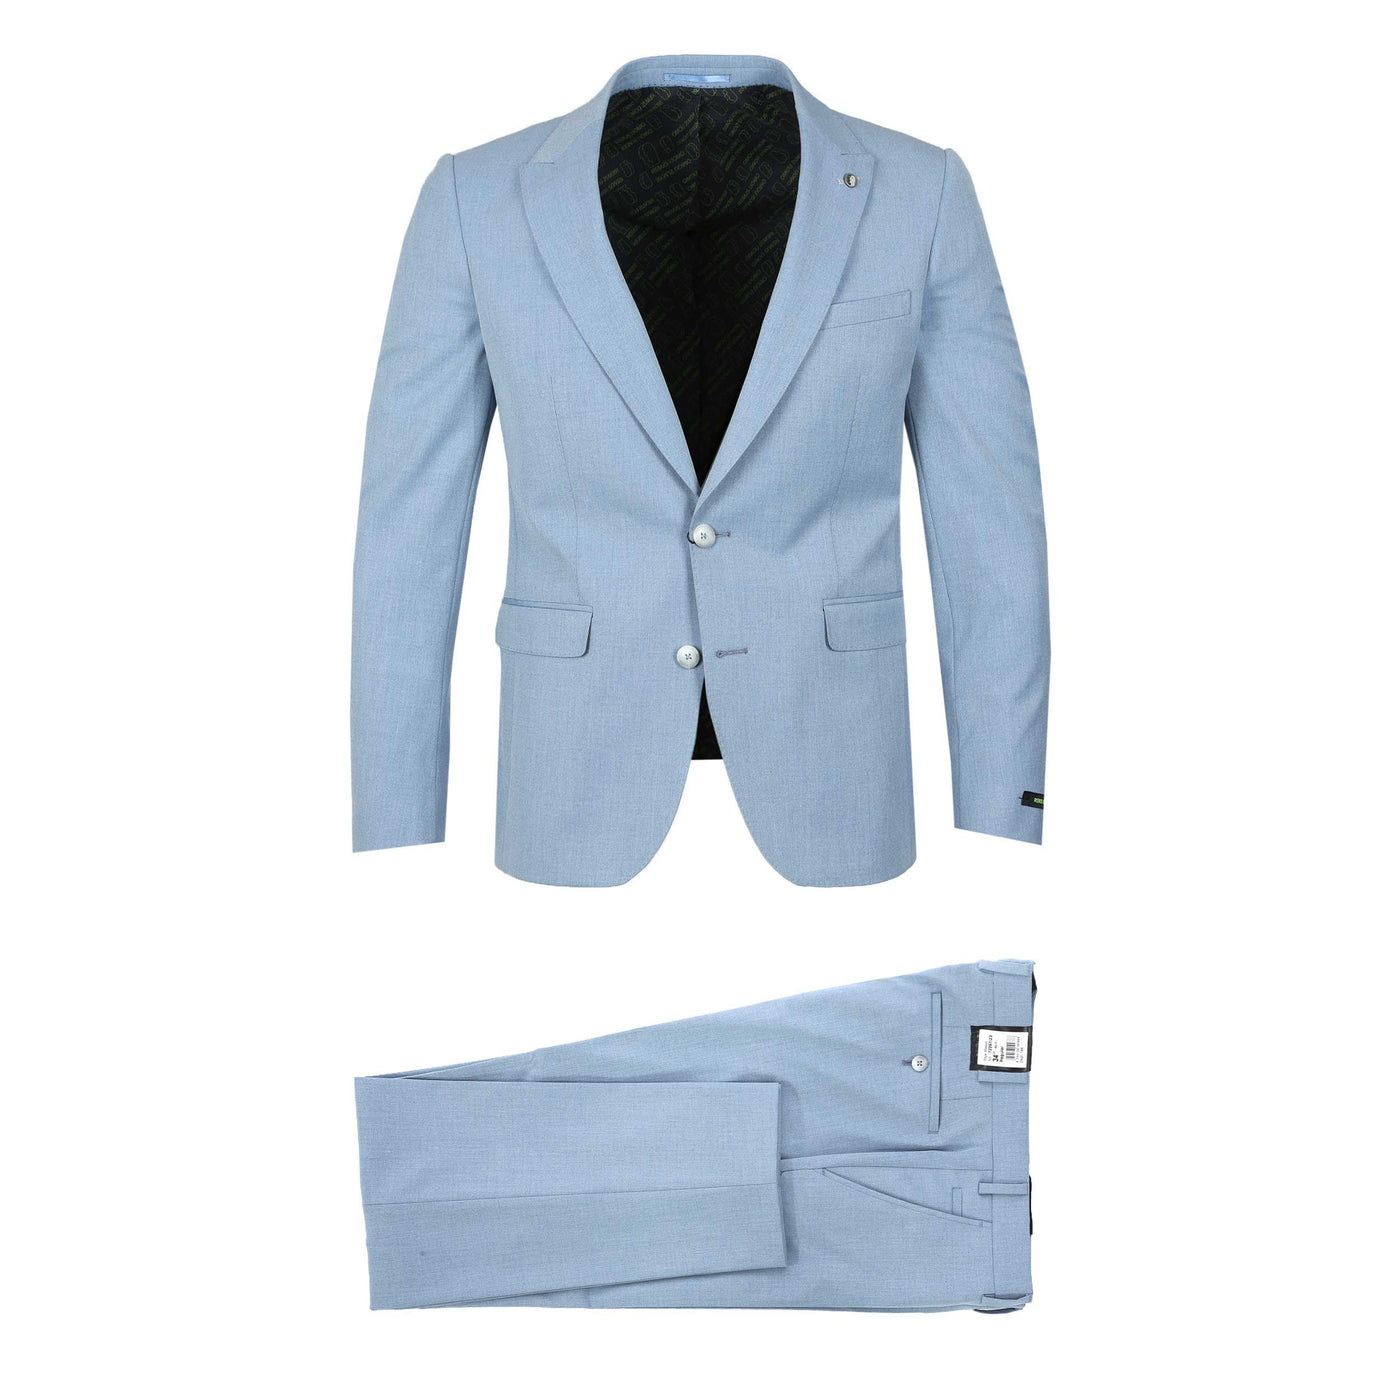 Remus Uomo Massa Jacket in Sky Blue Suit